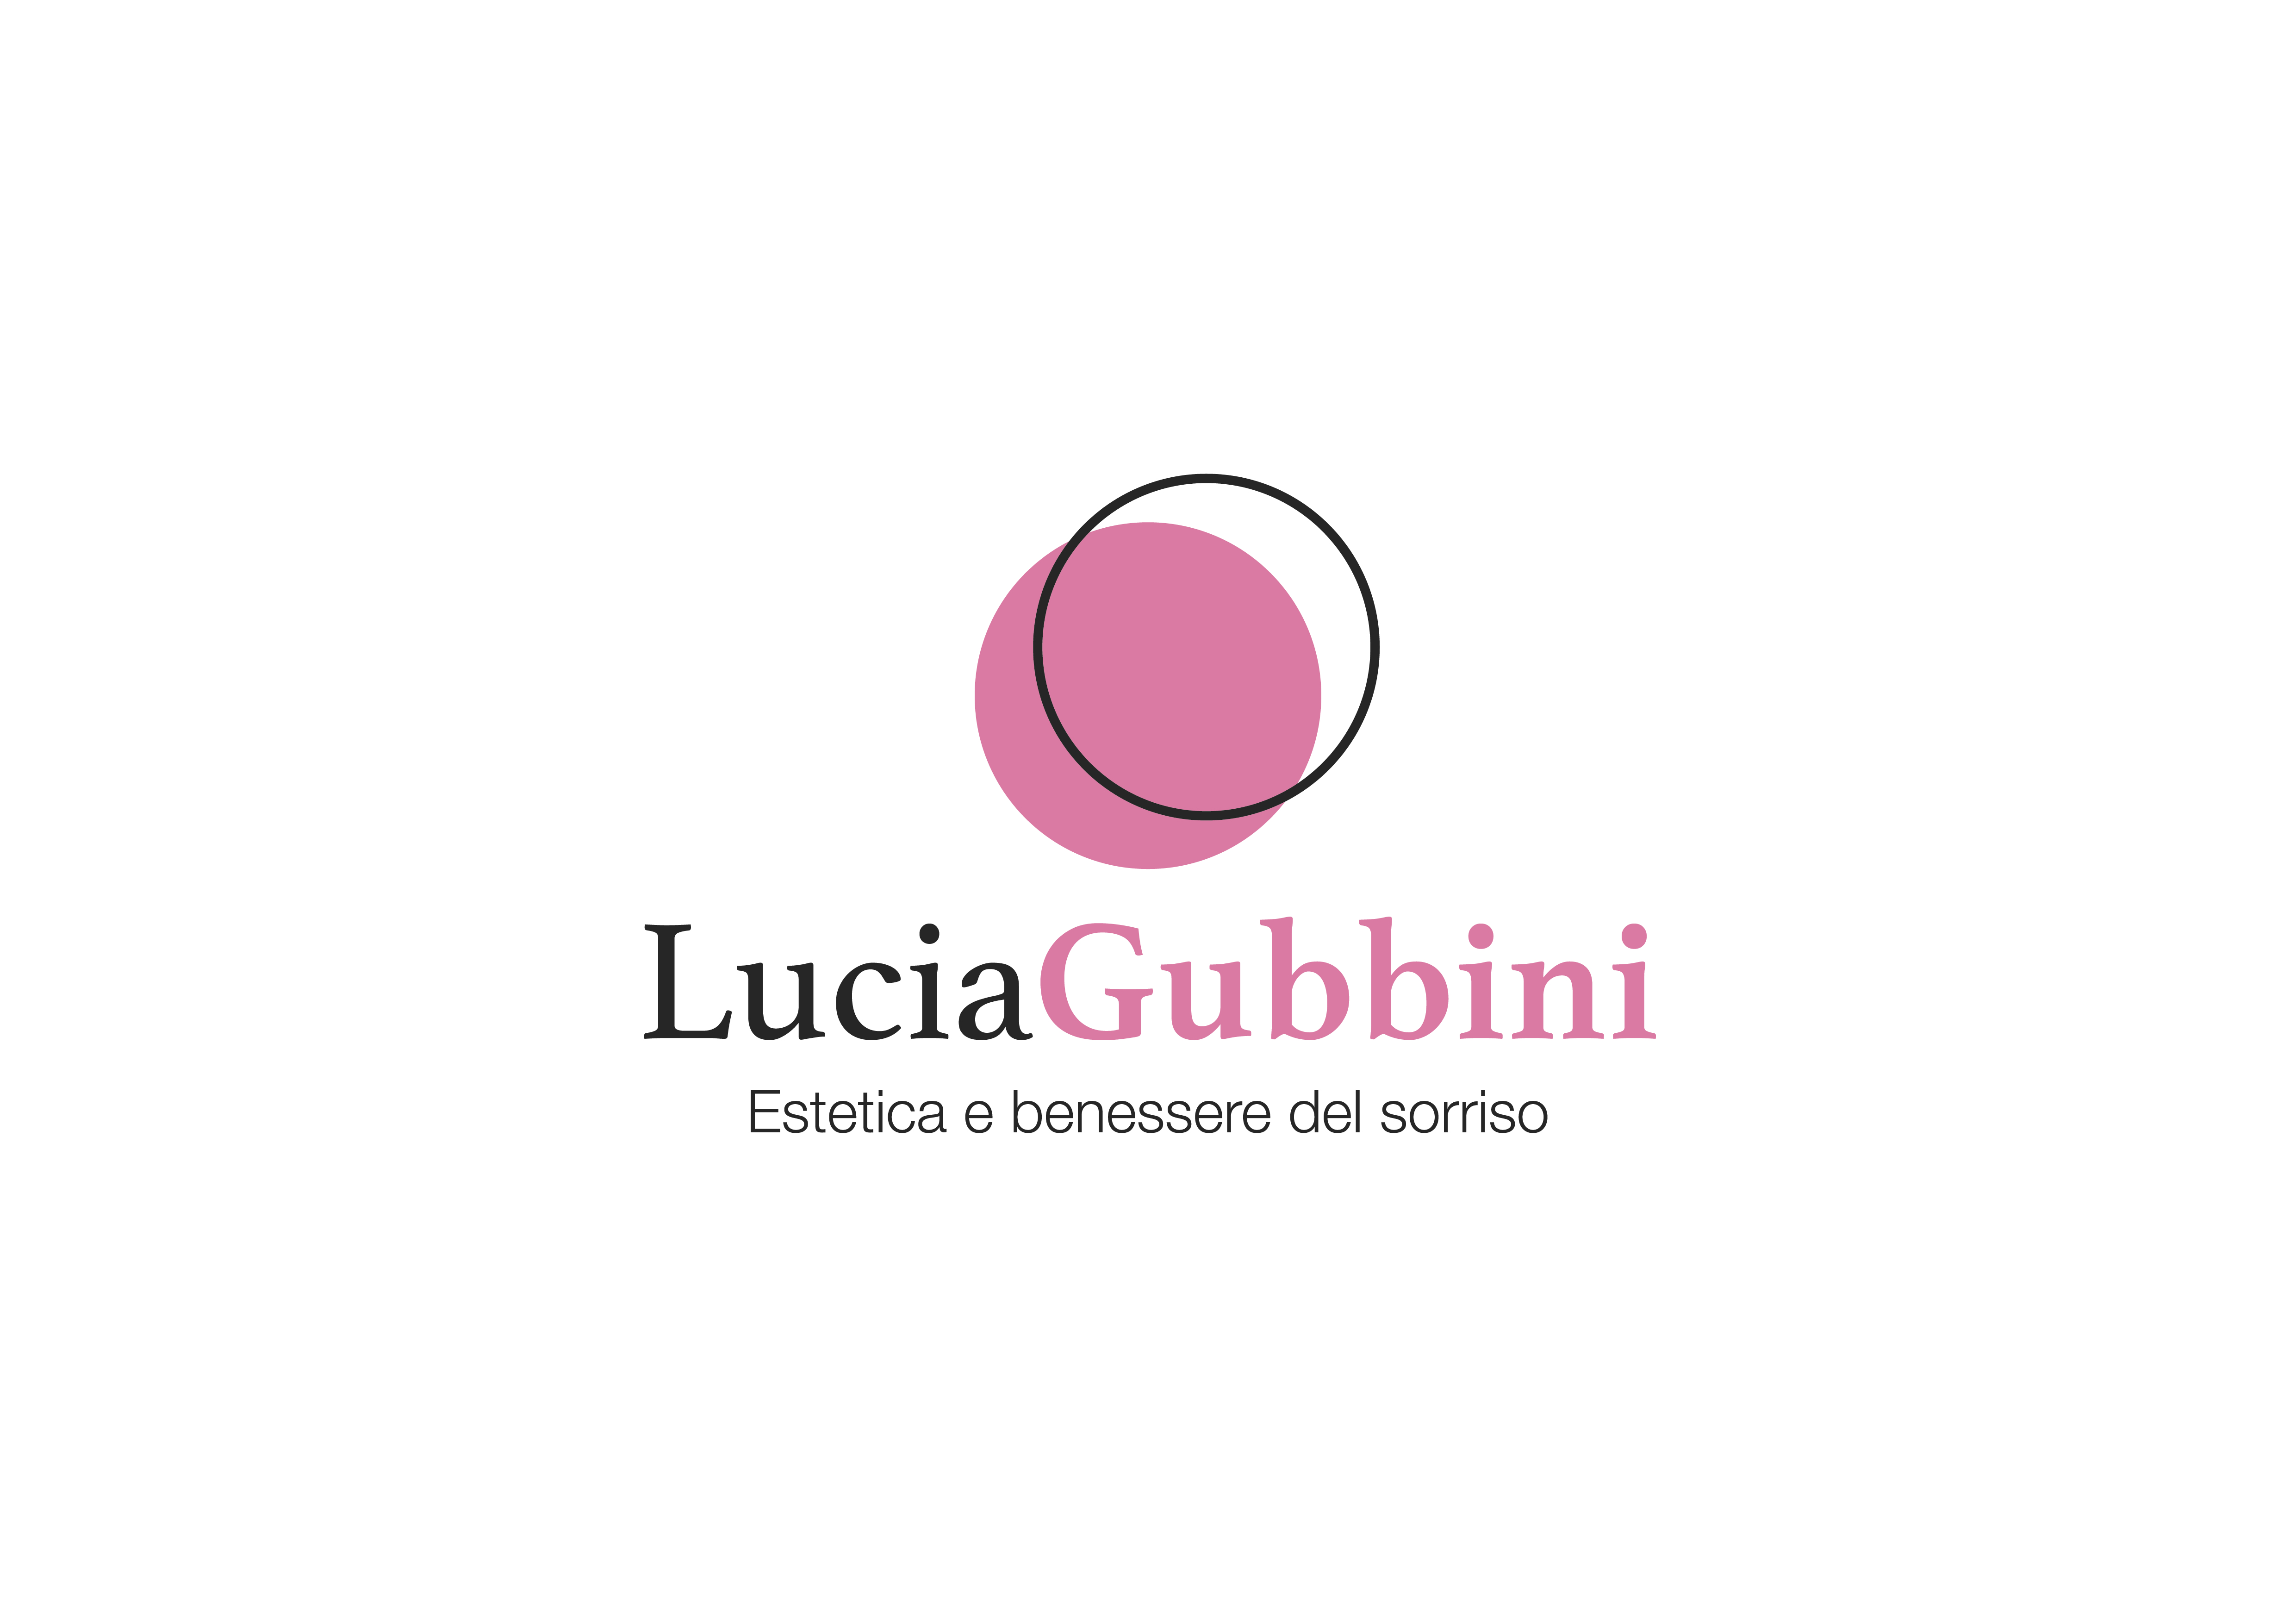 Lucia Gubbini